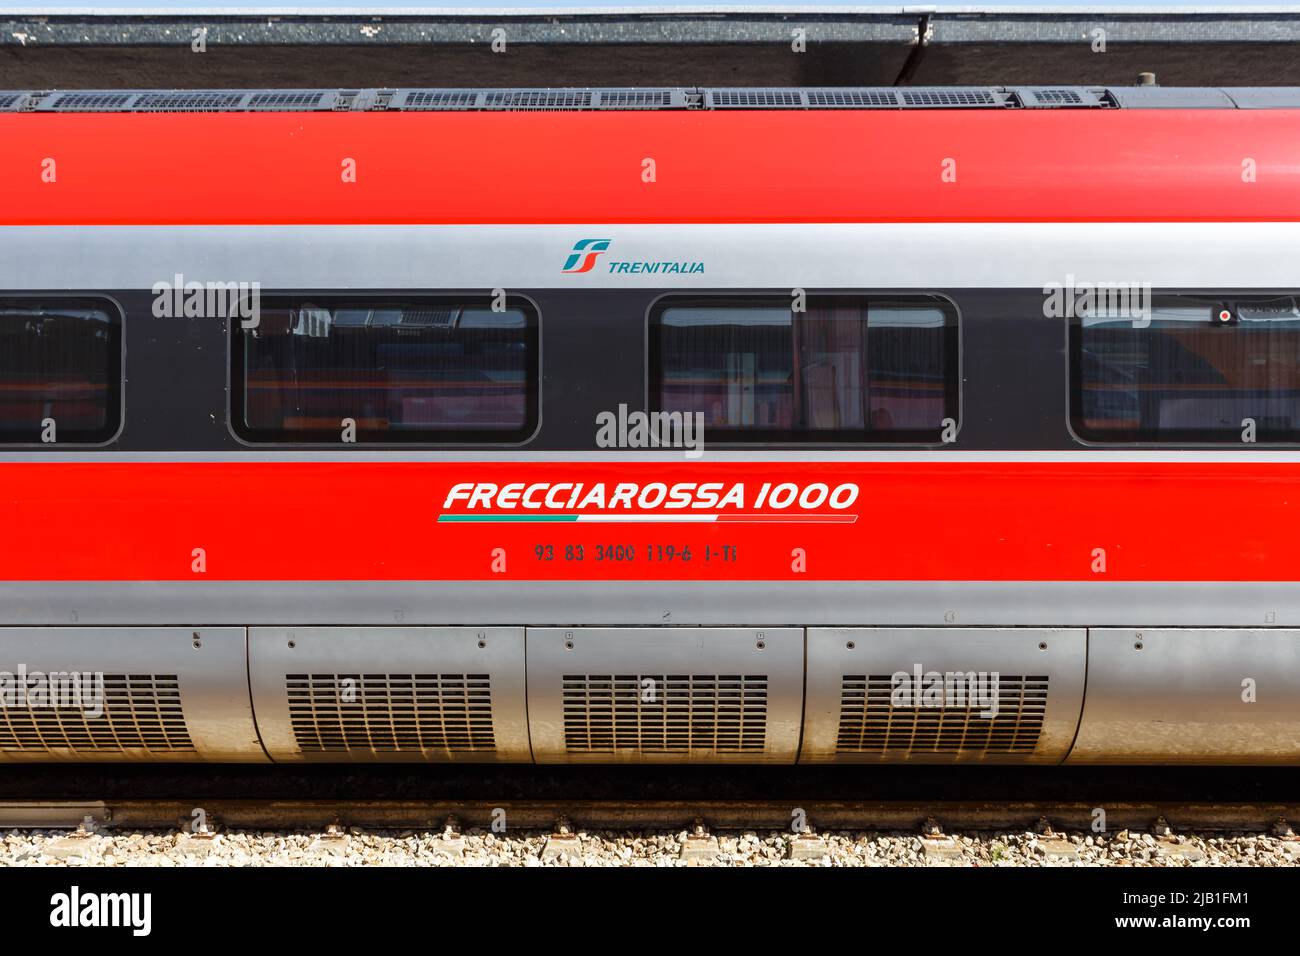 Venise, Italie - 21 mars 2022: Wagon avec logo de Frecciarossa FS ETR 1000 train à grande vitesse de Trenitalia à Venise Gare Santa Lucia i Banque D'Images